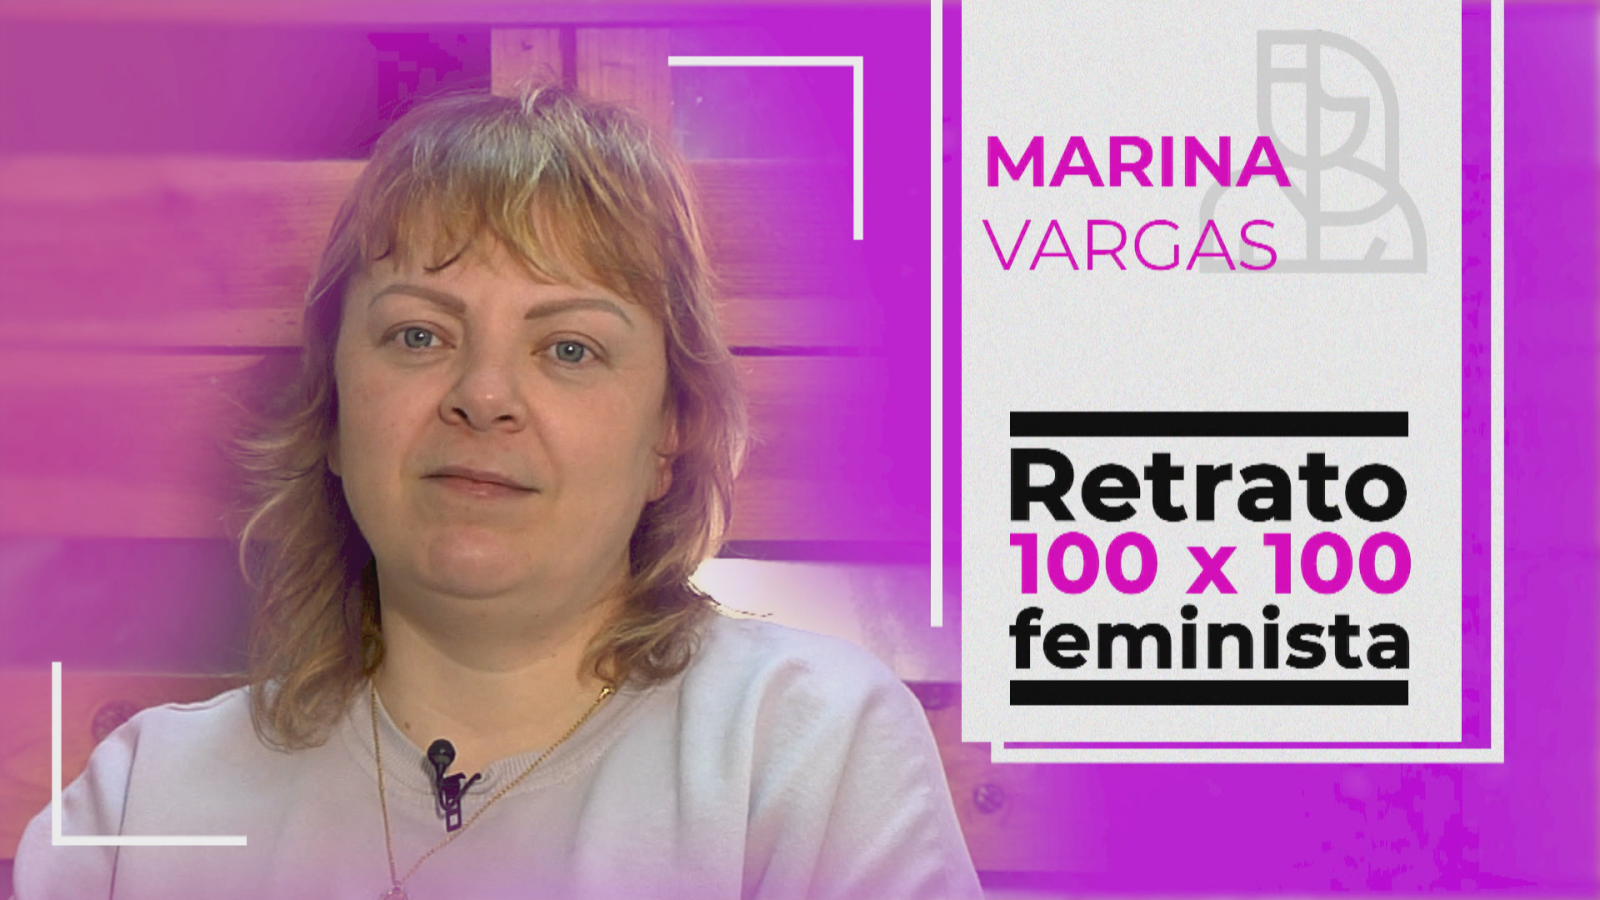 Retrato 100x100 feminista: Marina Vargas, artista